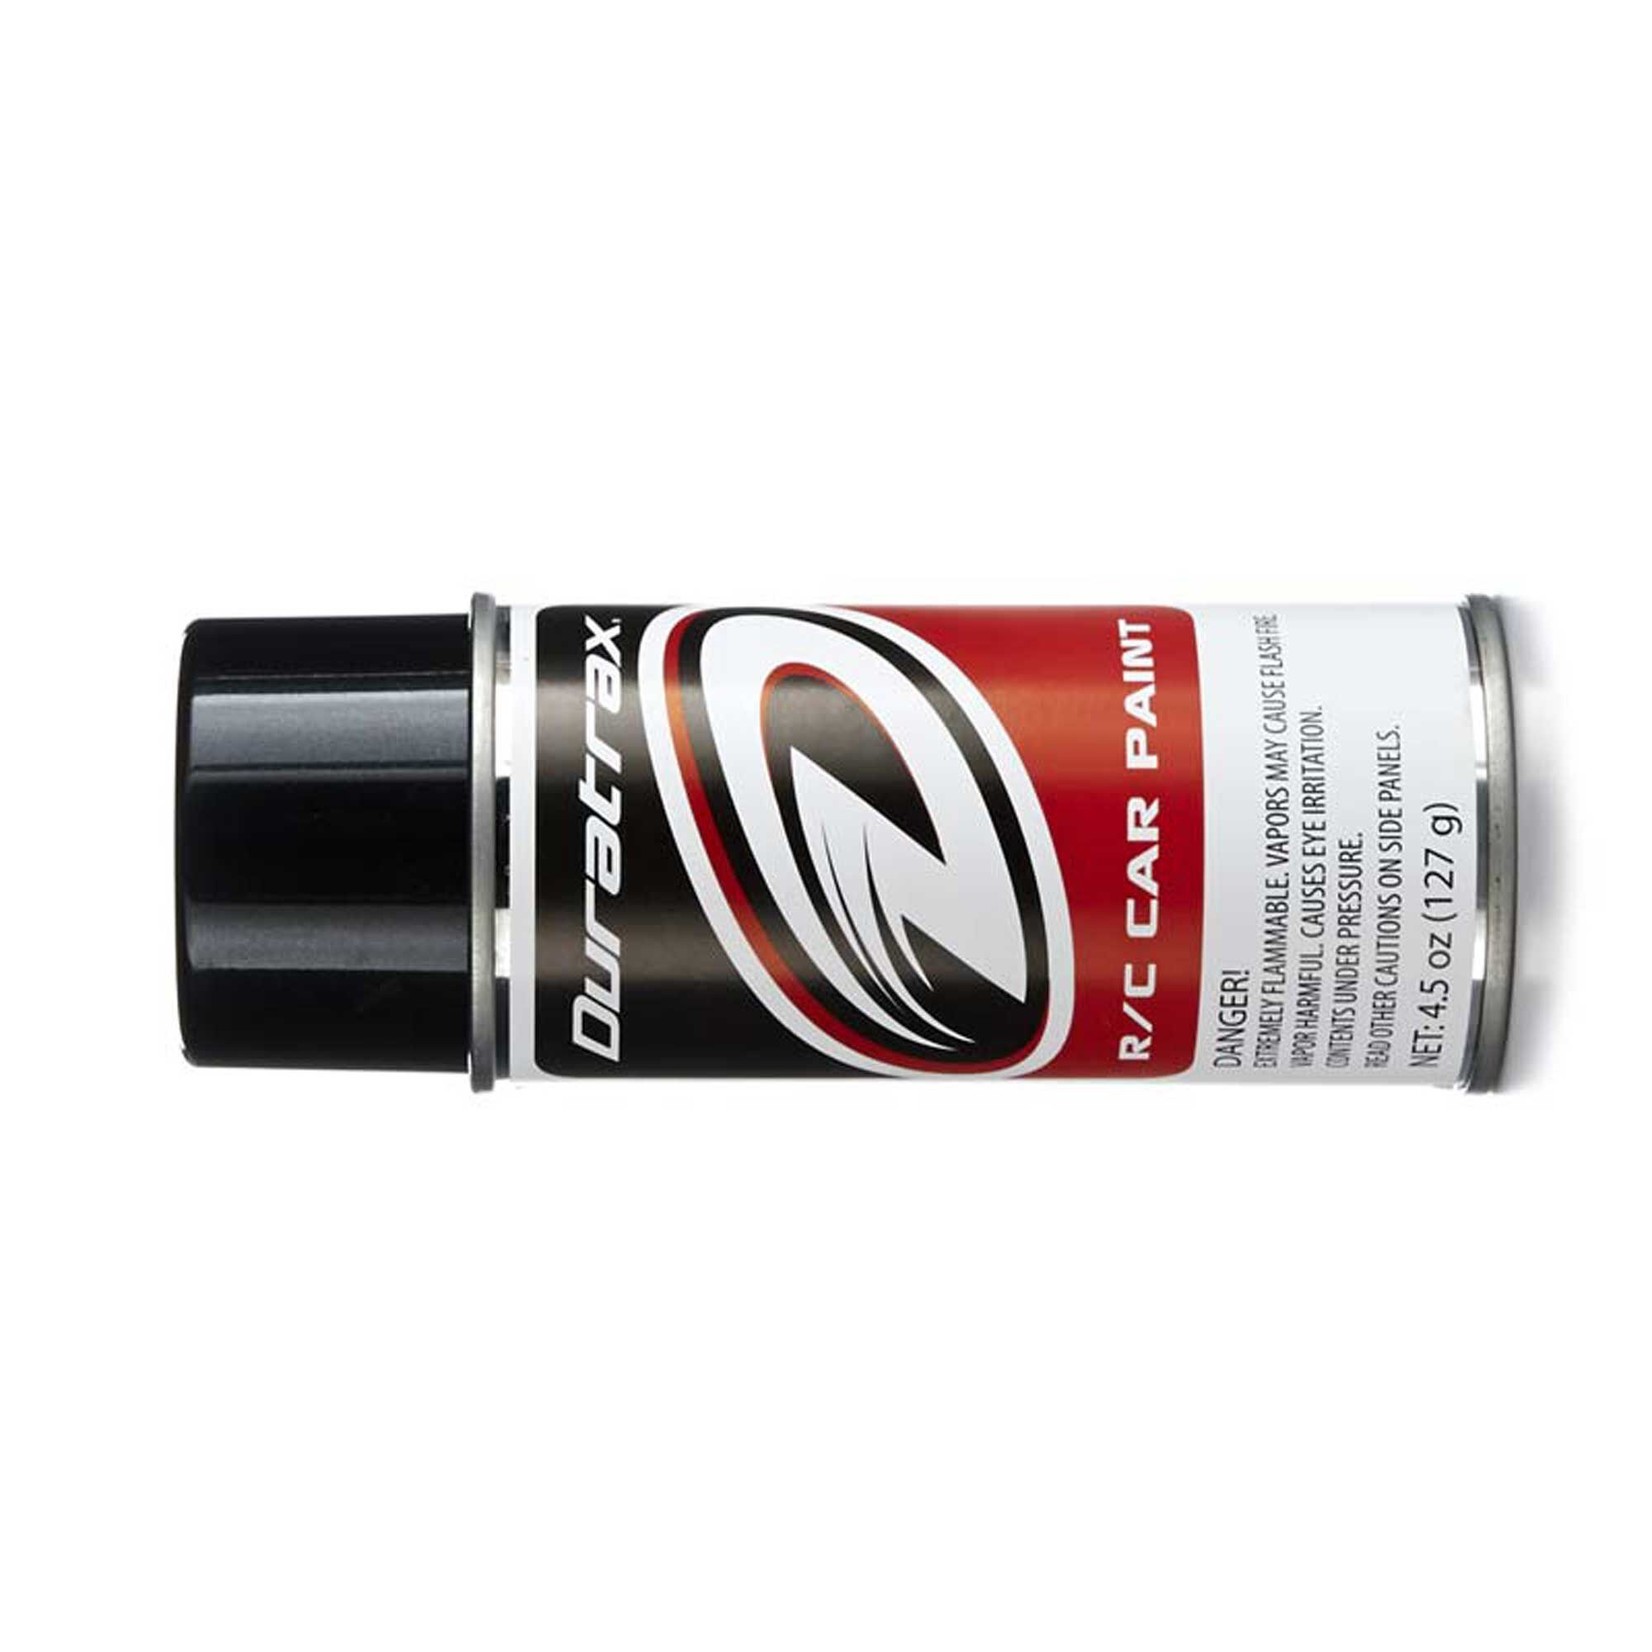 Duratrax Polycarb Spray, Metallic Black, 4.5 oz